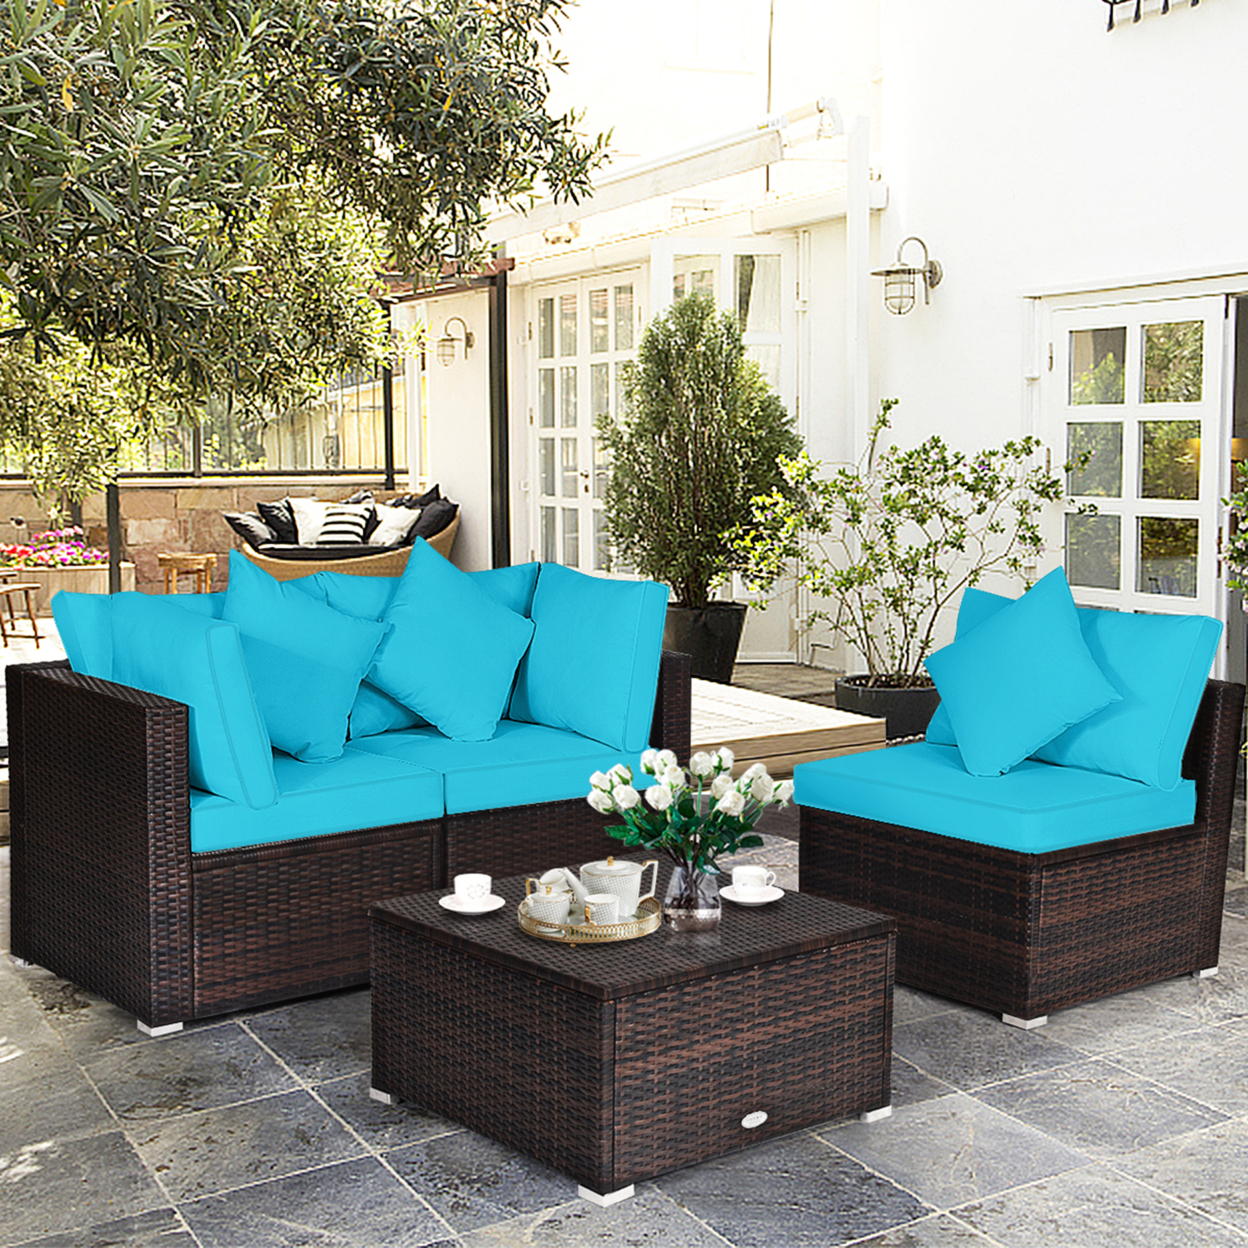 4PCS Rattan Patio Conversation Furniture Set Yard Outdoor W/ Turquoise Cushion